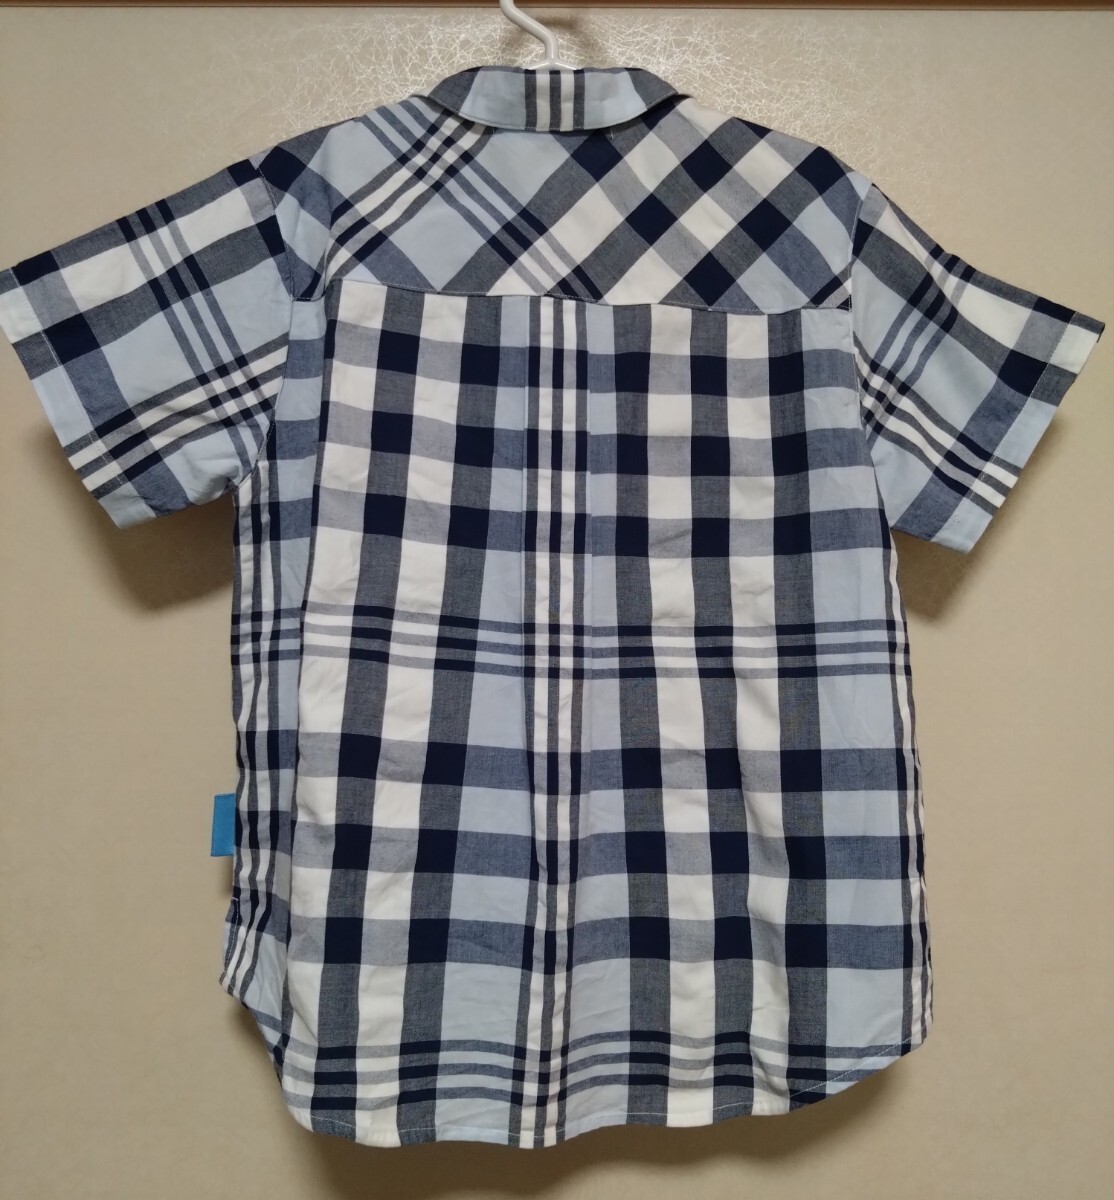  Familia short sleeves shirt Kids 120 check familiar cotton 100% white blue series check 